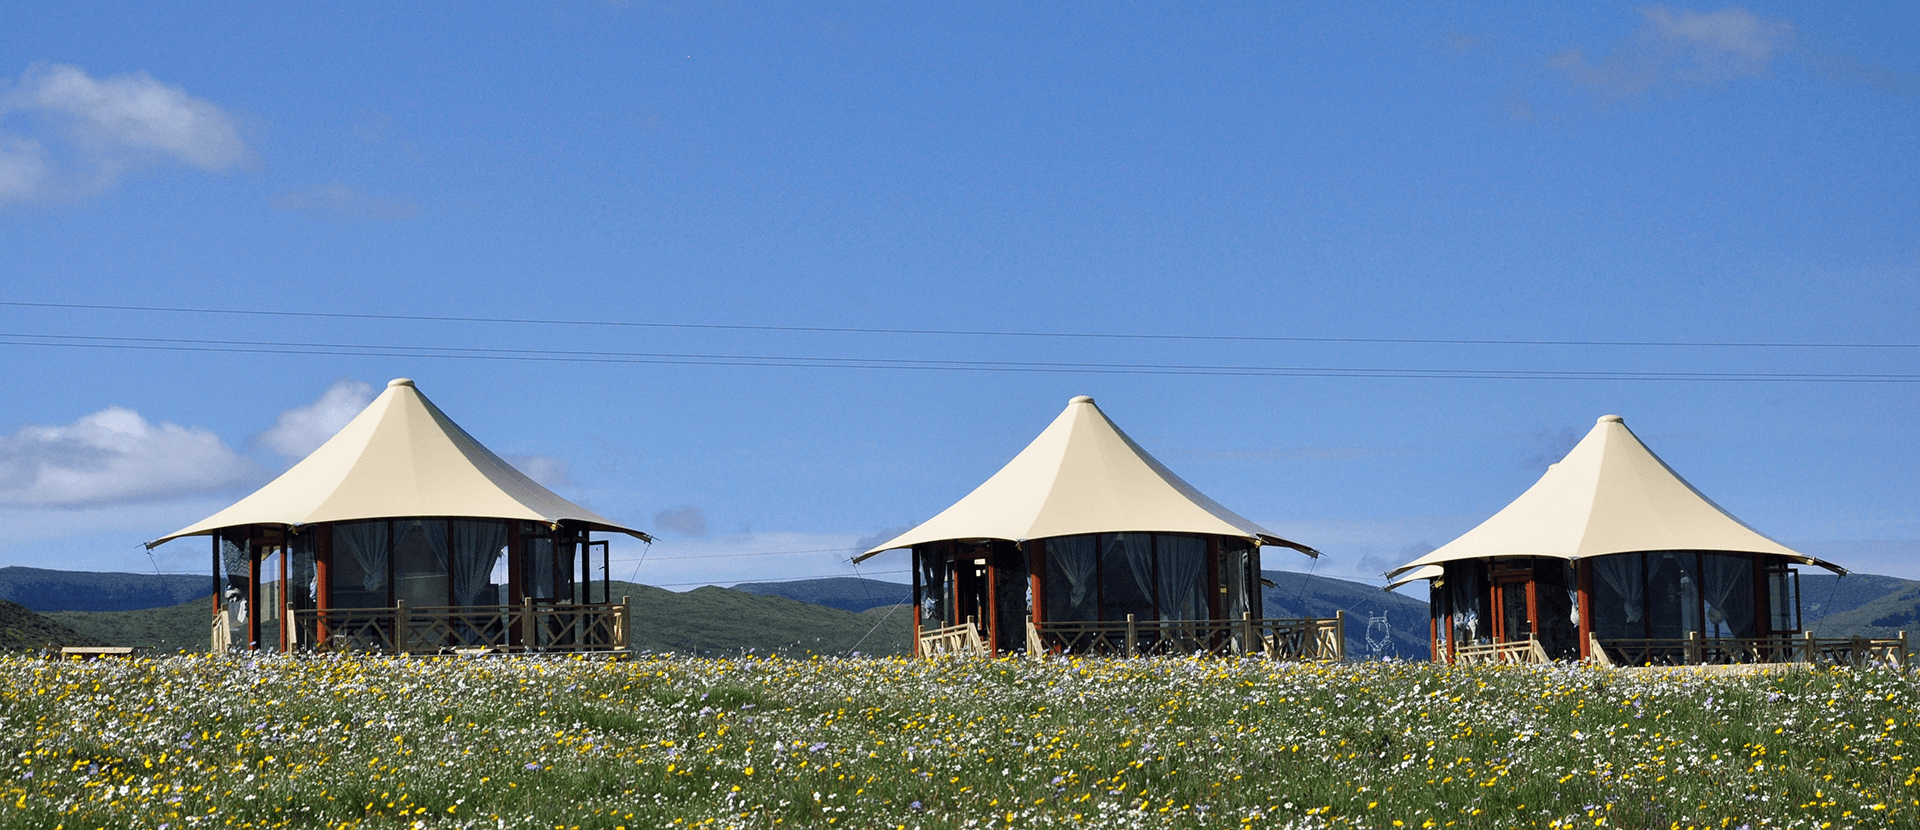 lodge tent in grassland